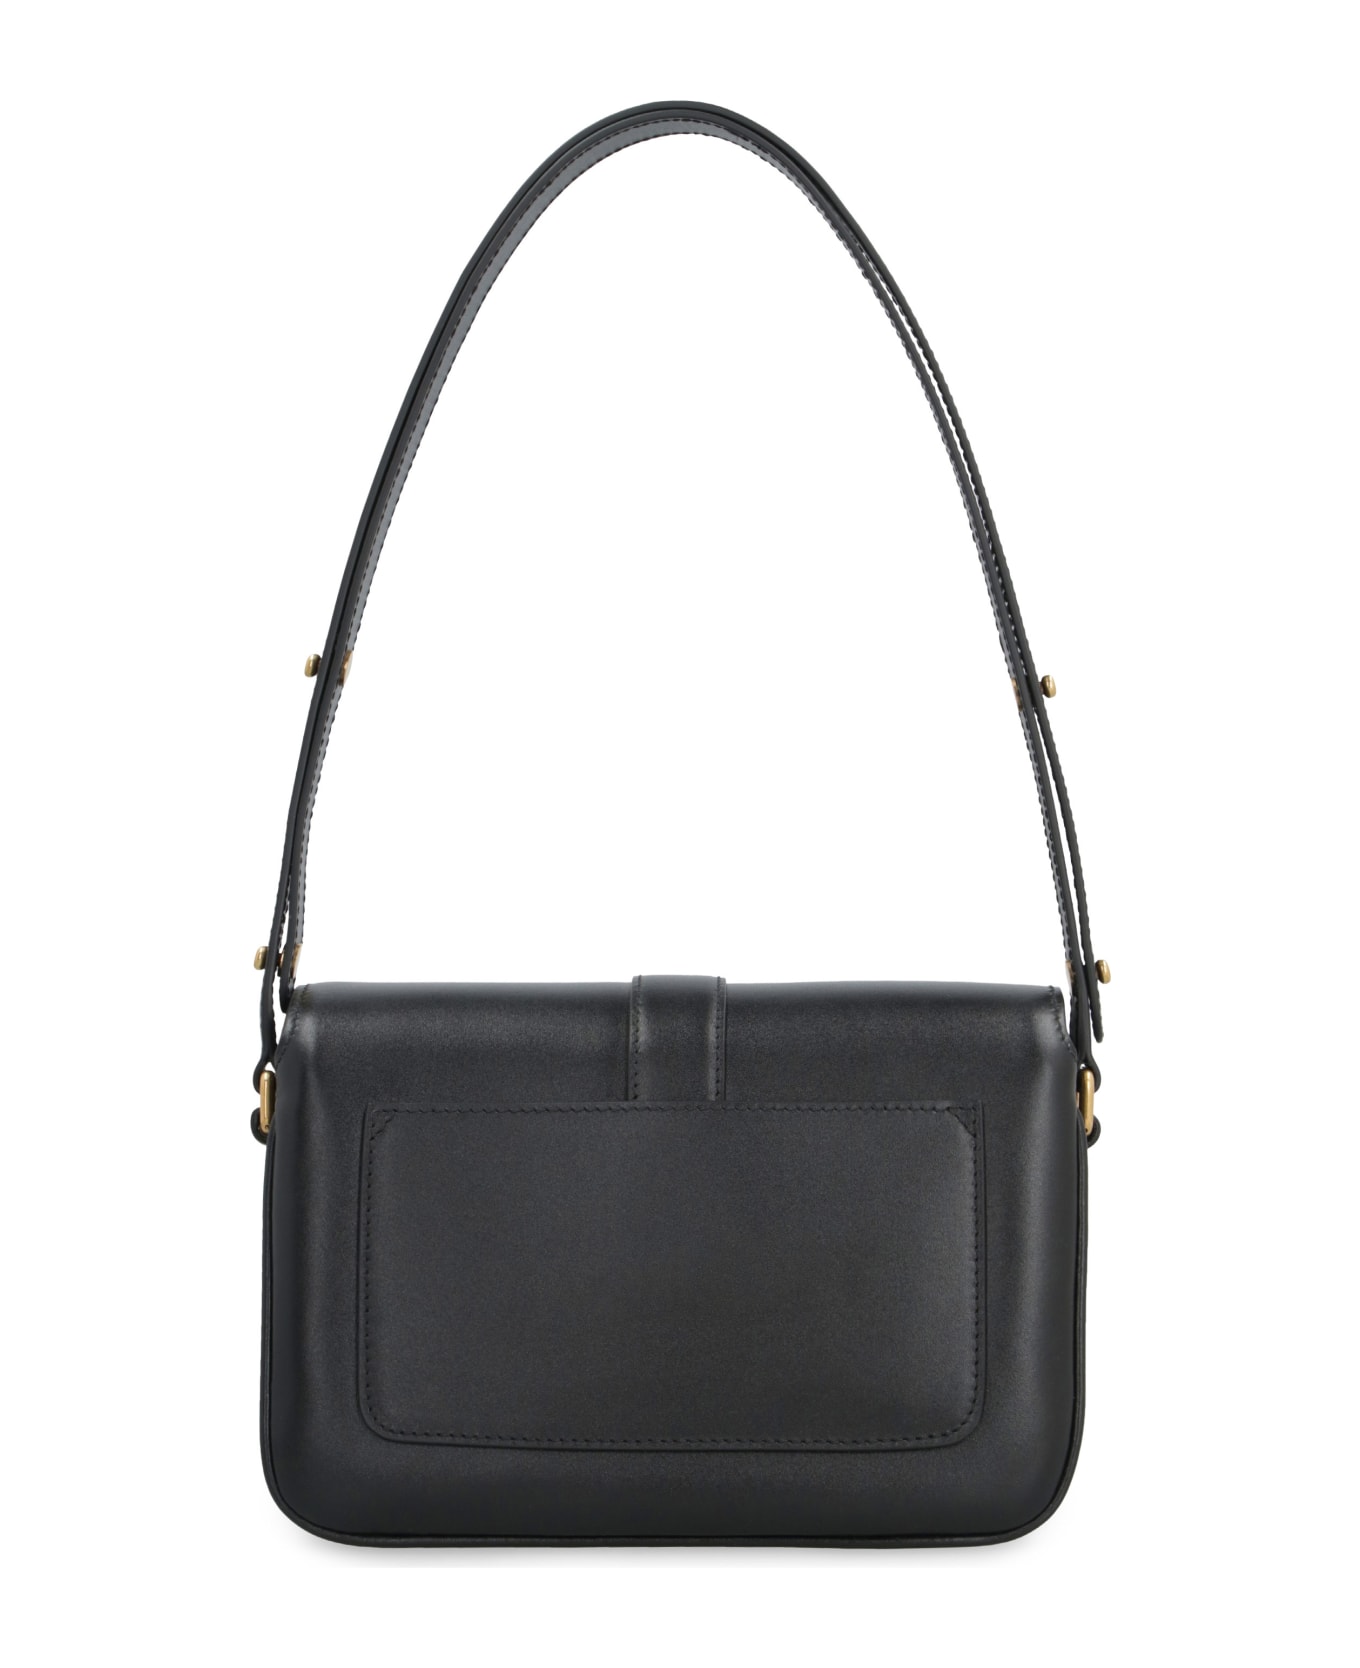 Balenciaga Lady Leather Shoulder Bag - BLACK